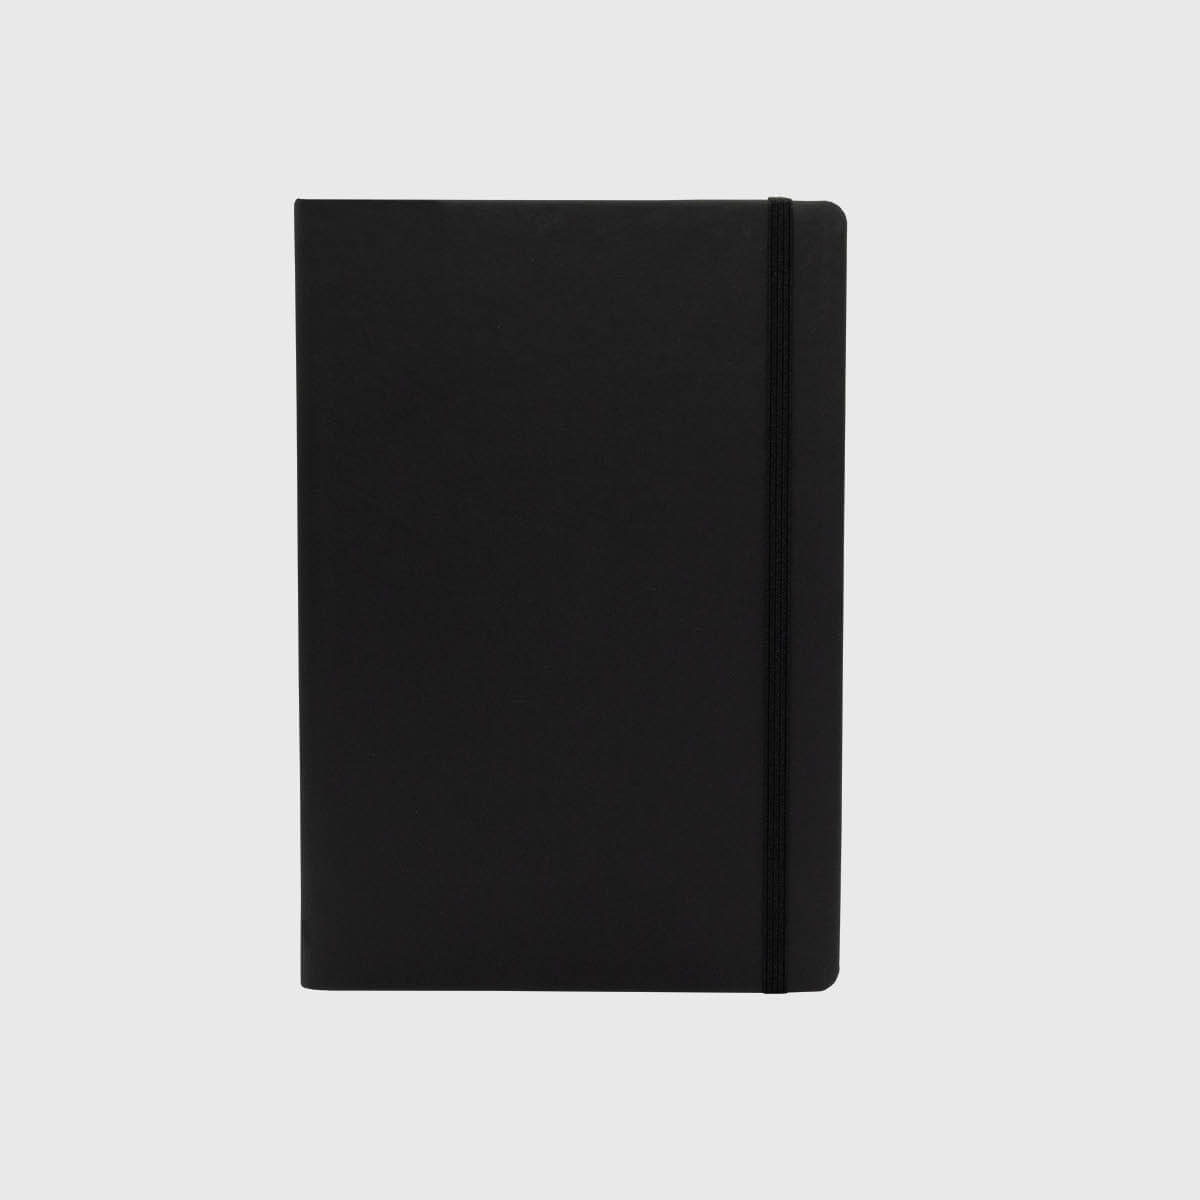 Notizbuch nachhaltig A5 schwarz